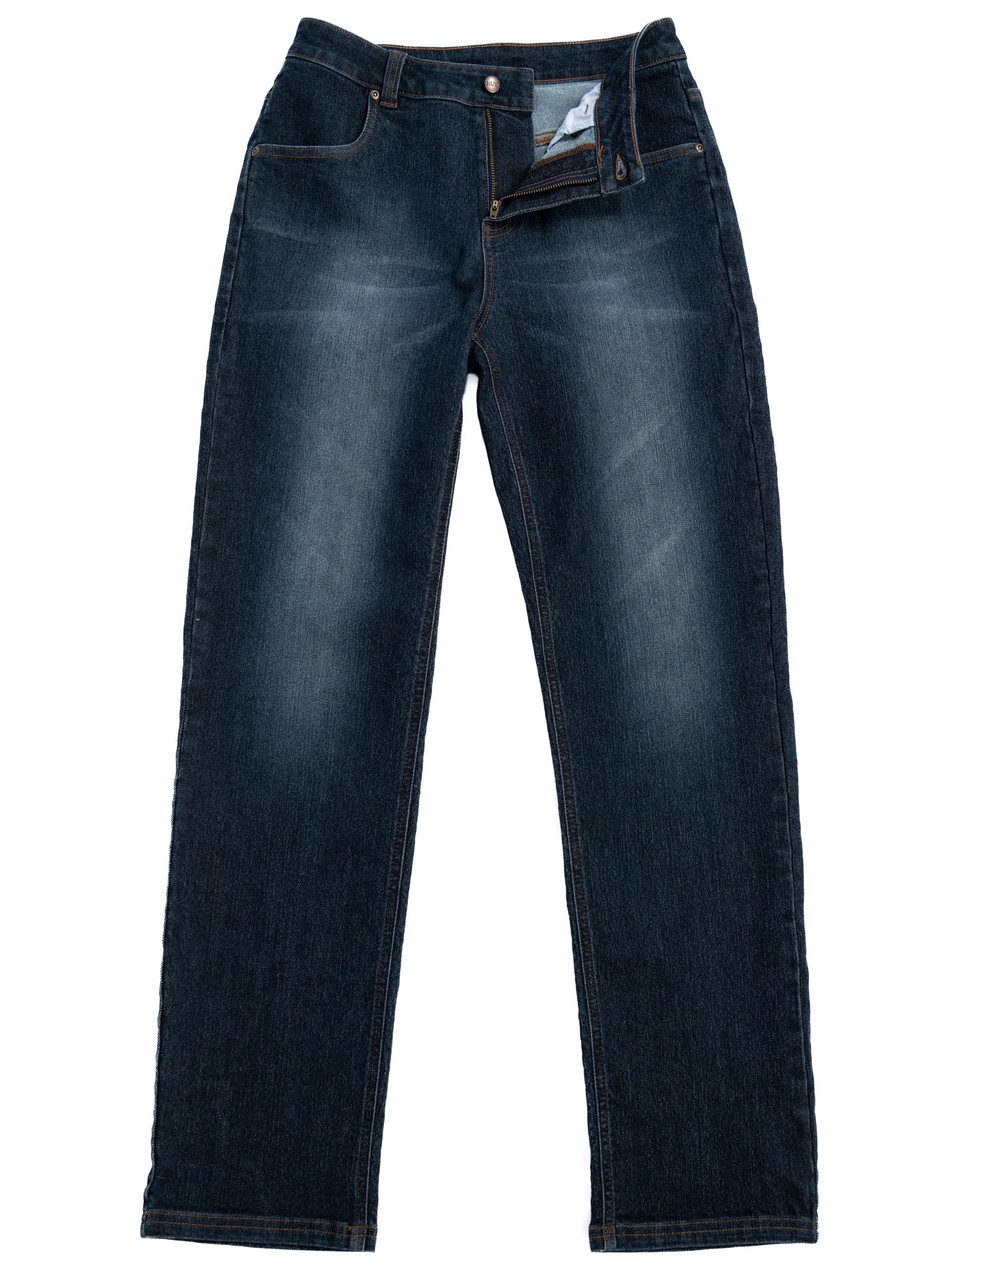 HUE Women's Jeans & Denim